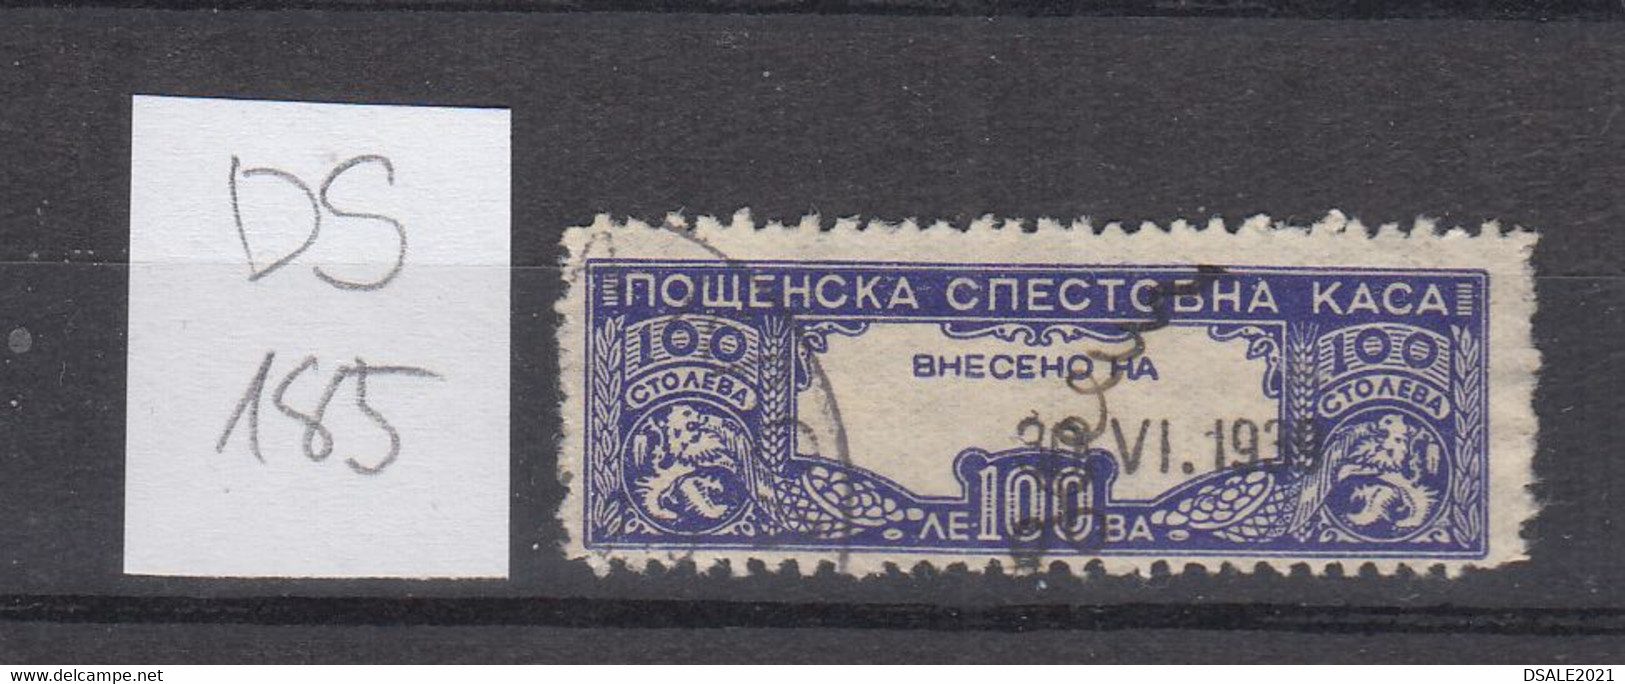 Bulgaria Bulgarie Bulgarije 1930s/40s Postal Savings Bank Contribution Fee 100Lv. Fiscal Revenue Stamp (ds185) - Timbres De Service